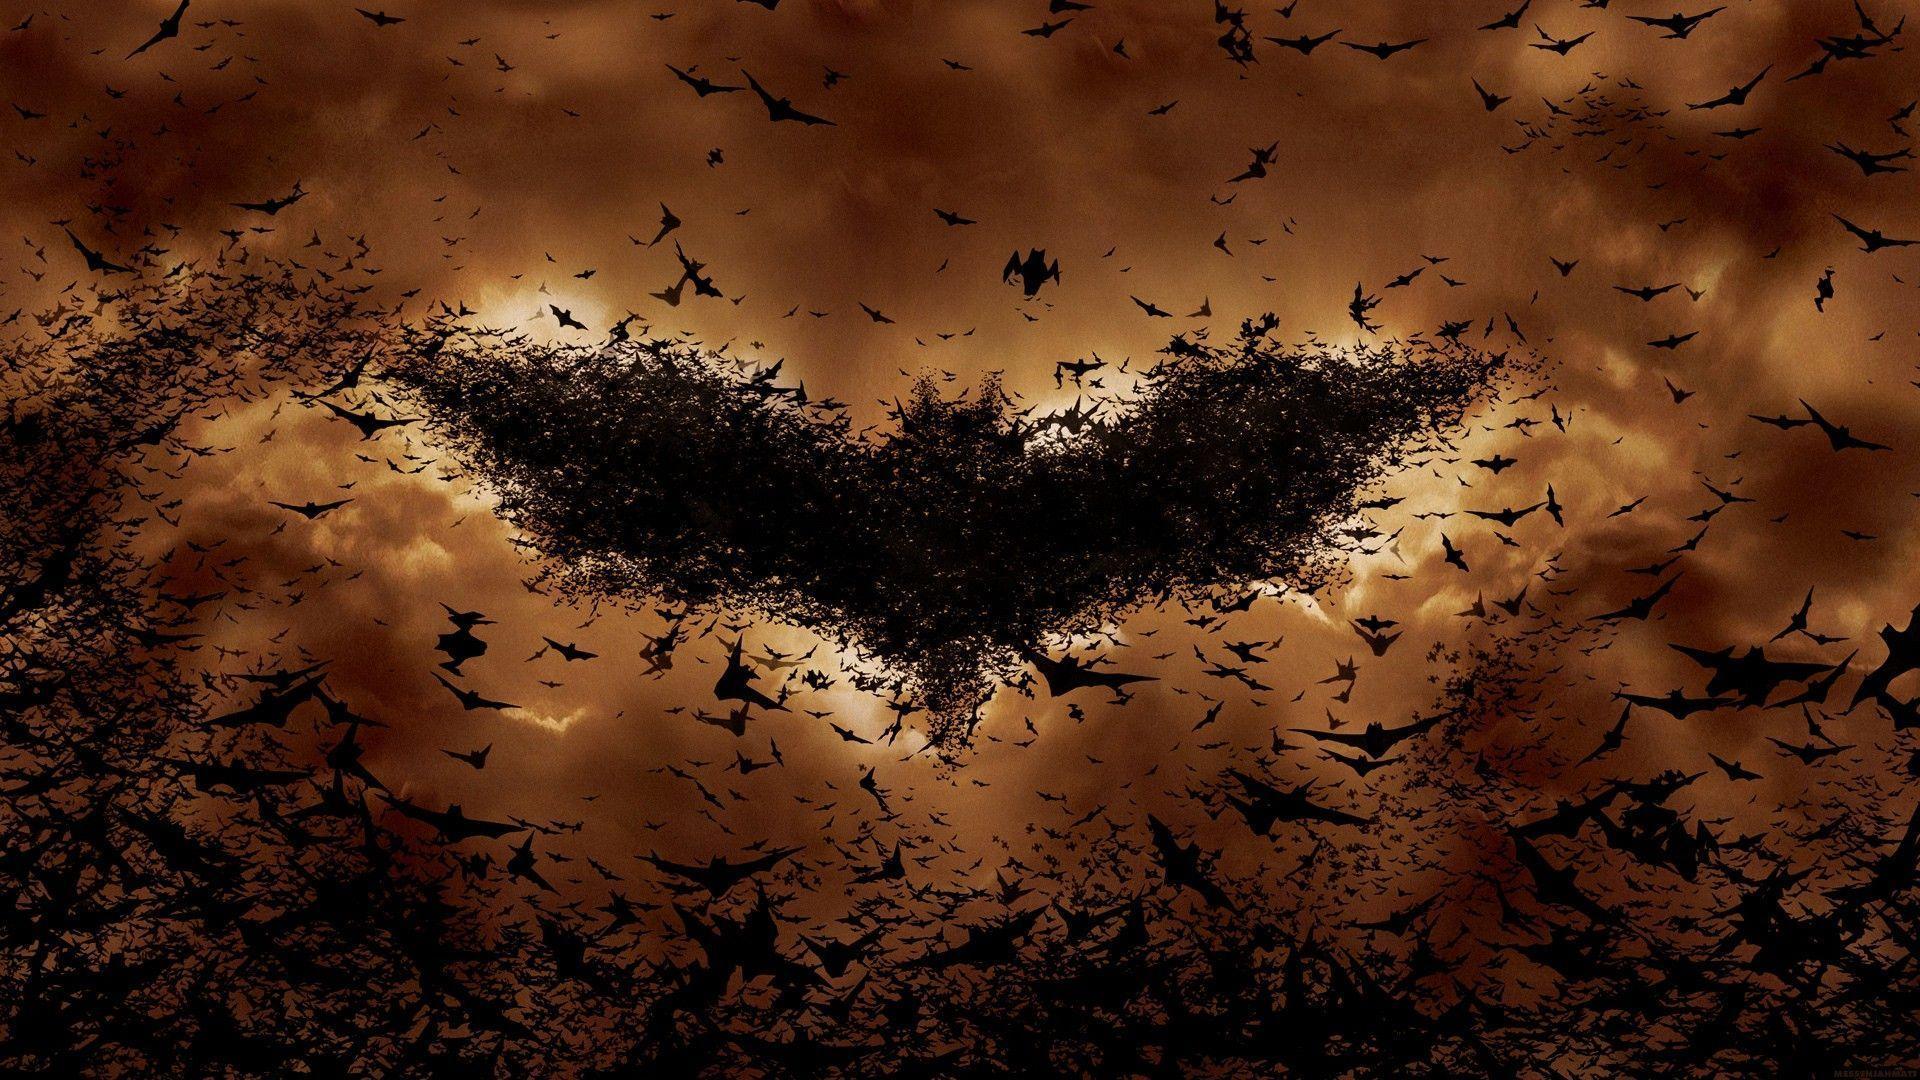 Batman Bats Art 4k HD Superheroes 4k Wallpapers Images Backgrounds  Photos and Pictures